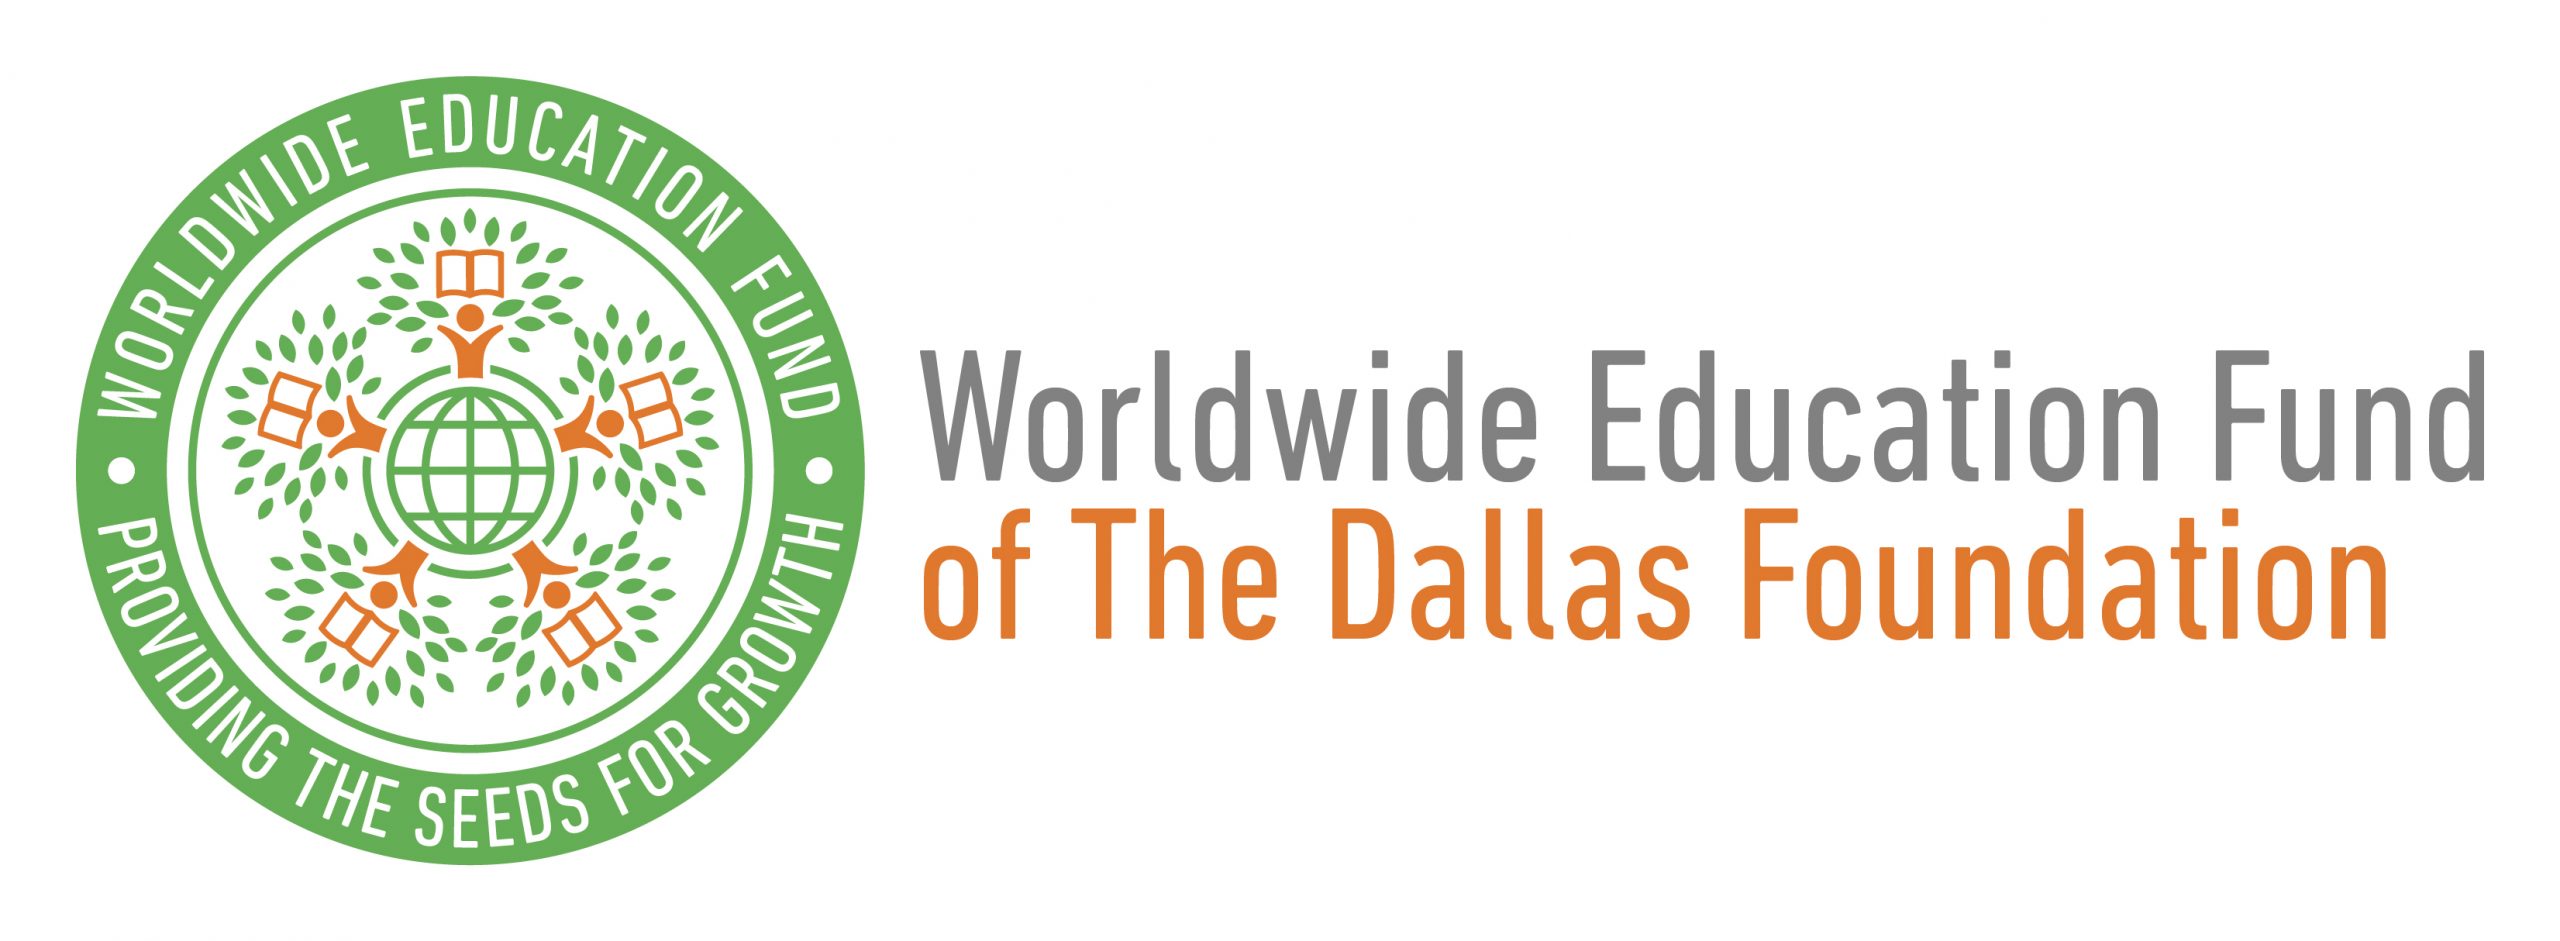 Worldwide Education Fund of the Dallas Foundation